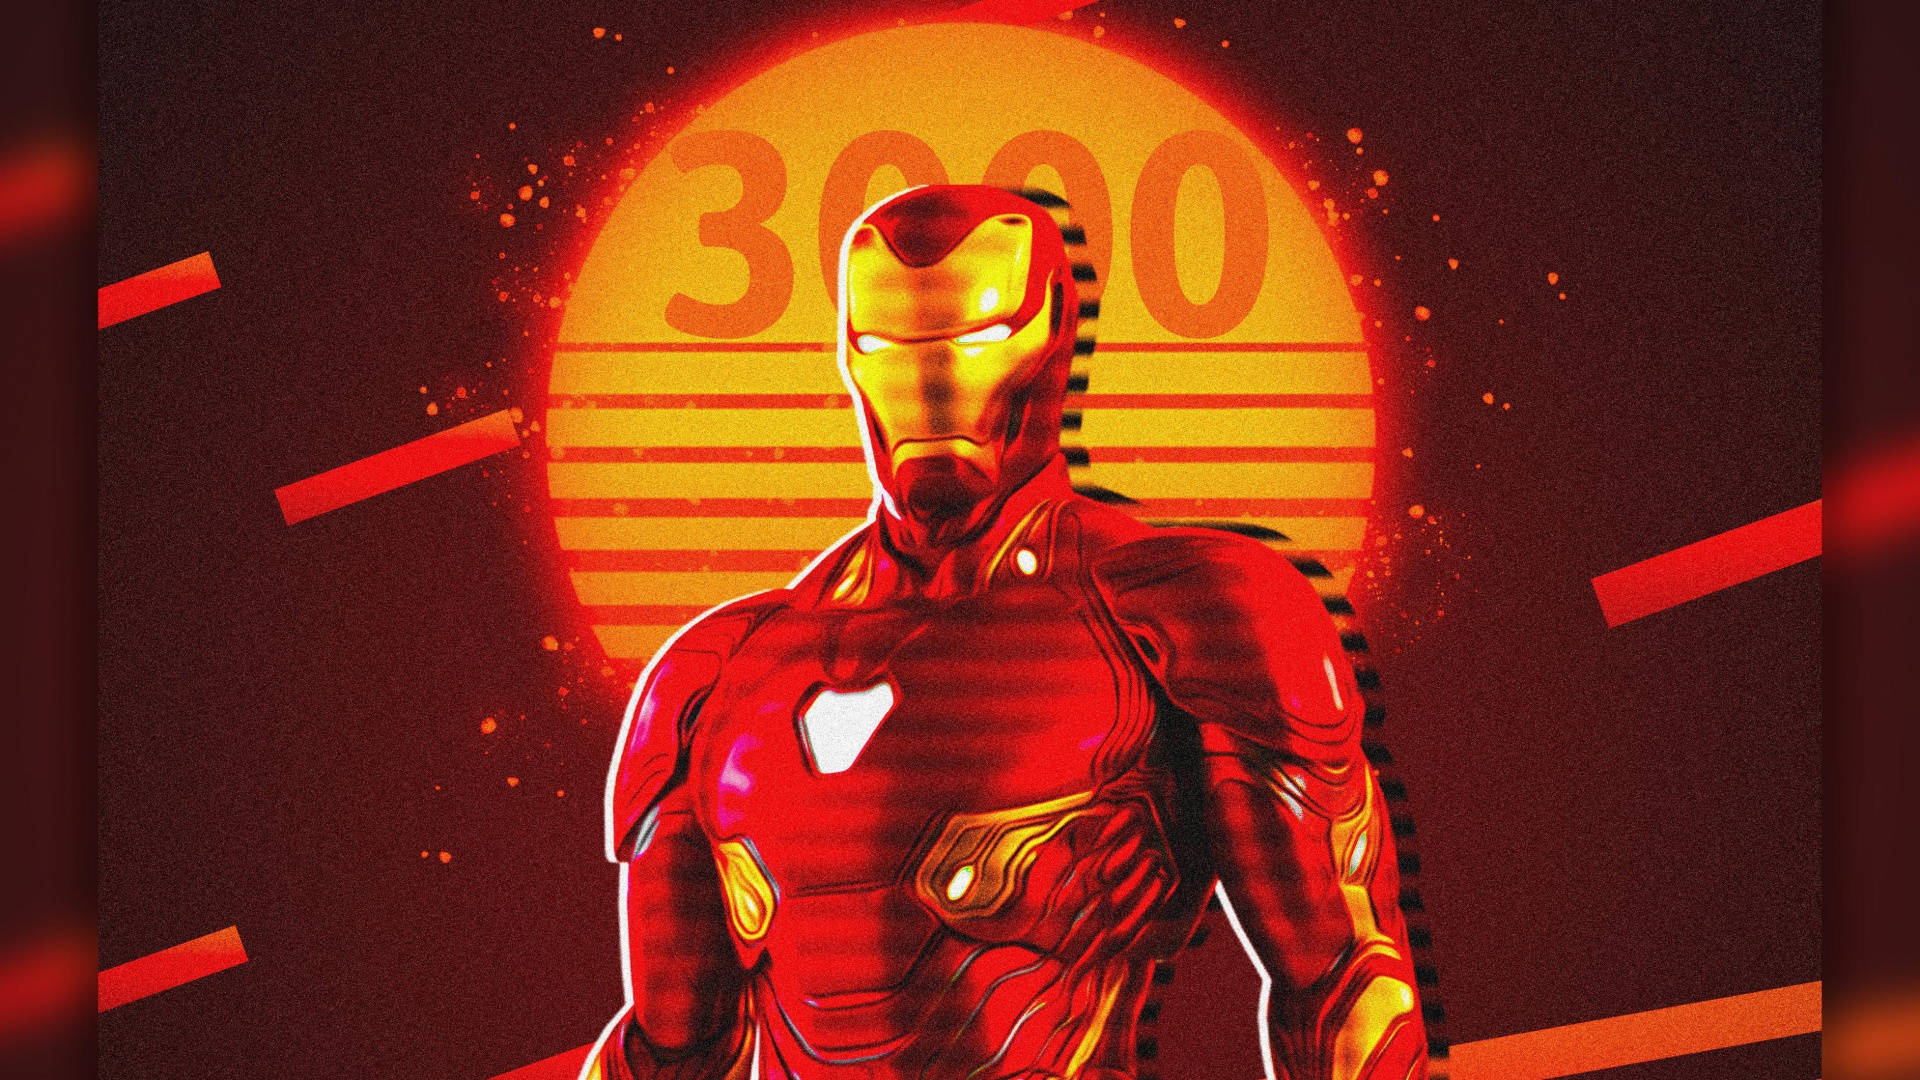 Free Iron Man Full Hd Wallpaper Downloads, [100+] Iron Man Full Hd  Wallpapers for FREE 